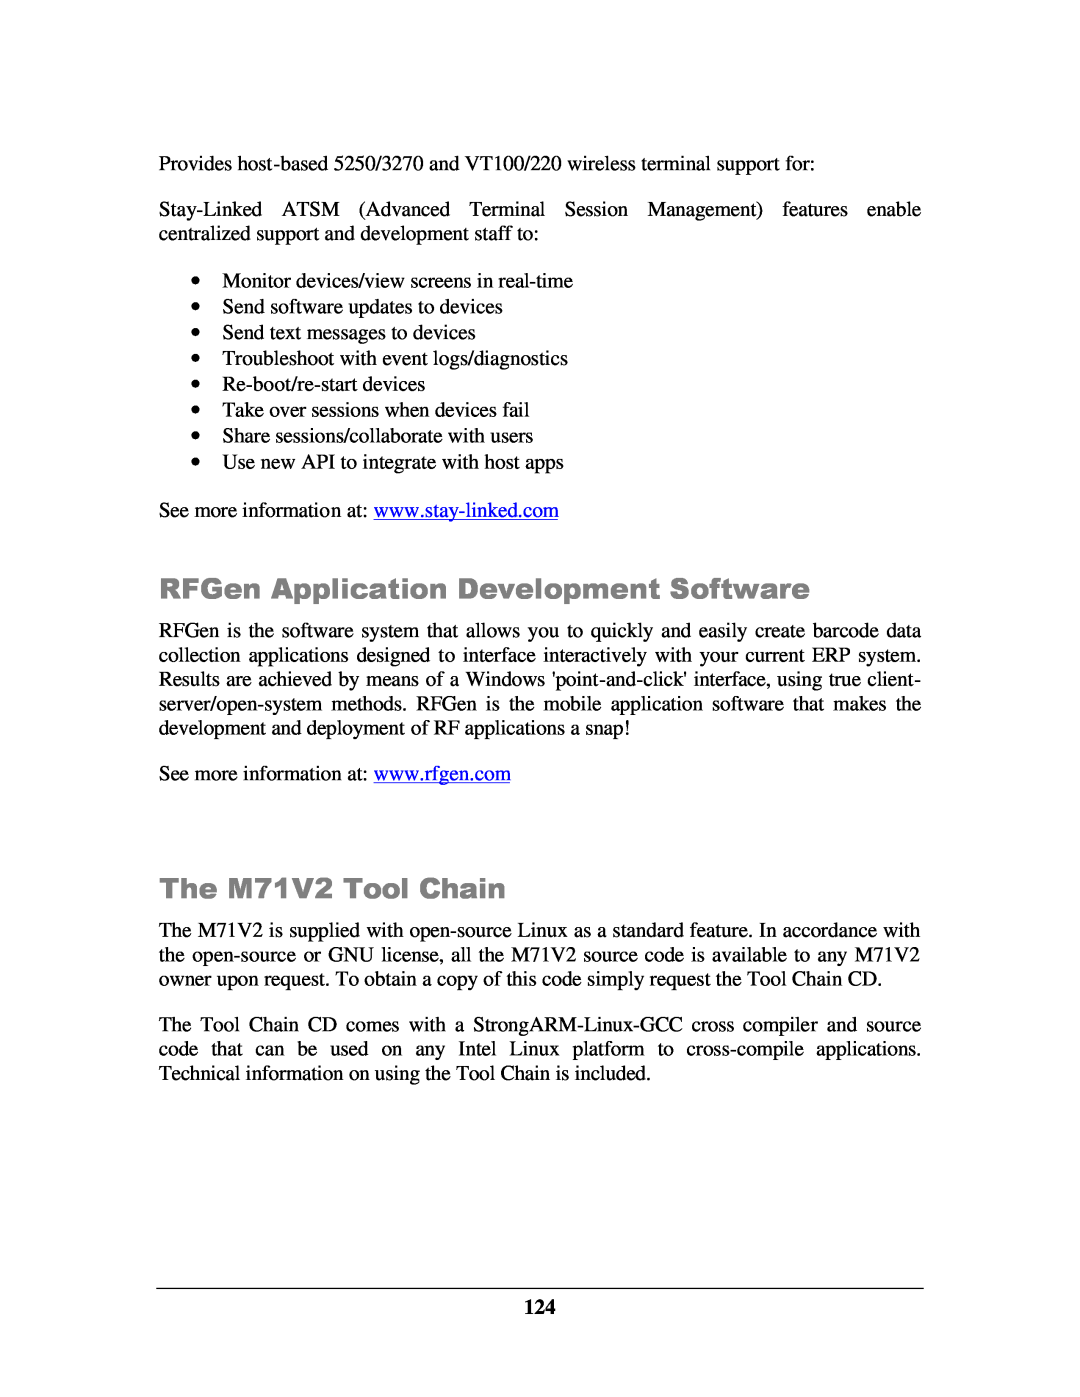 IBM manual RFGen Application Development Software, The M71V2 Tool Chain 